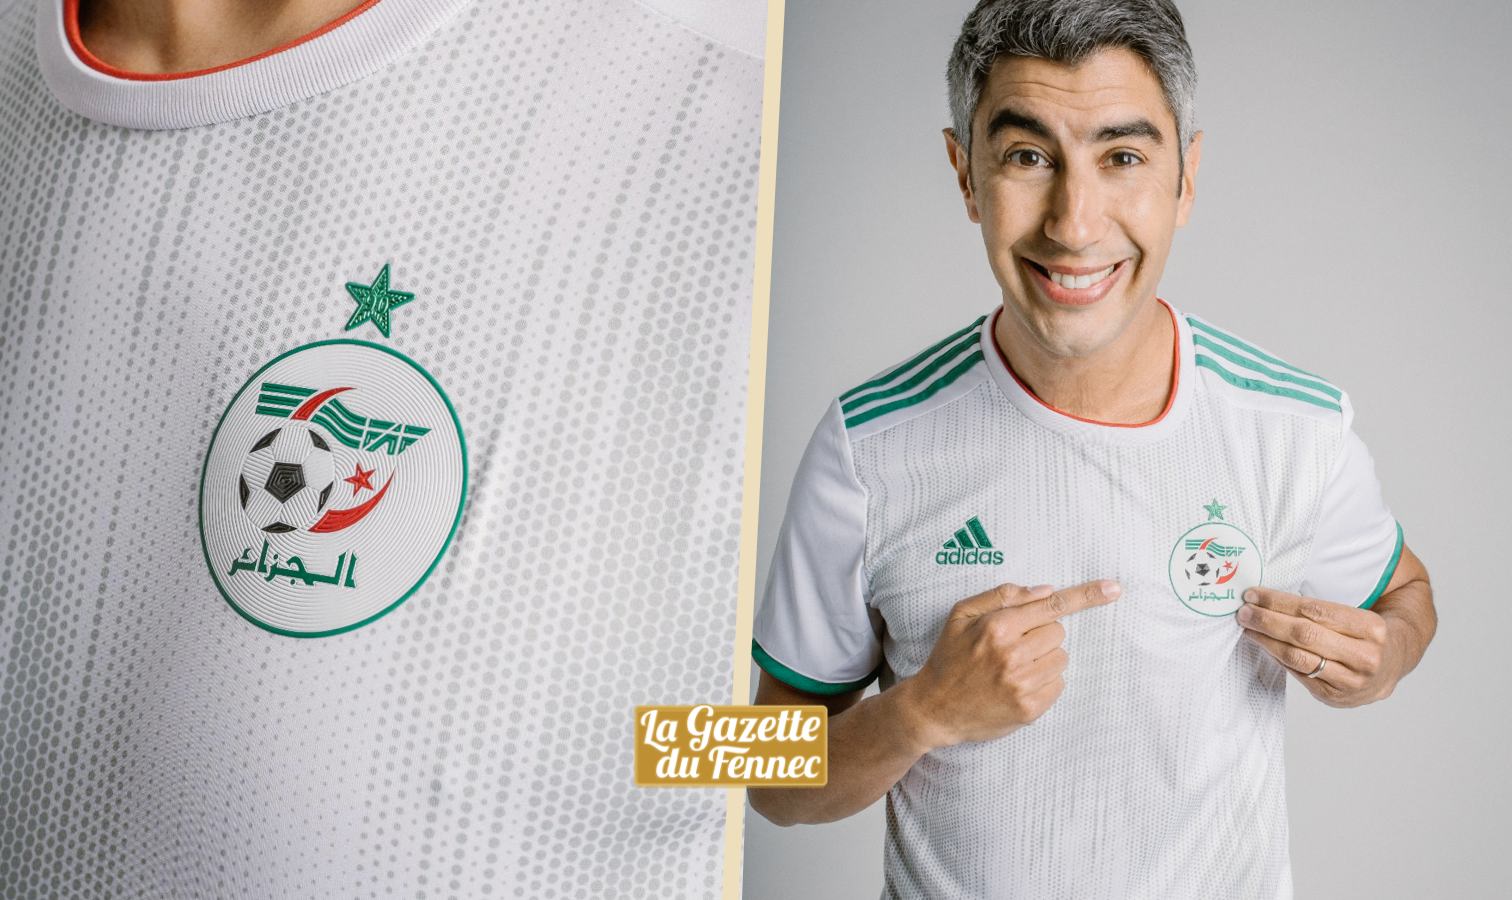 adidas algerie 2019